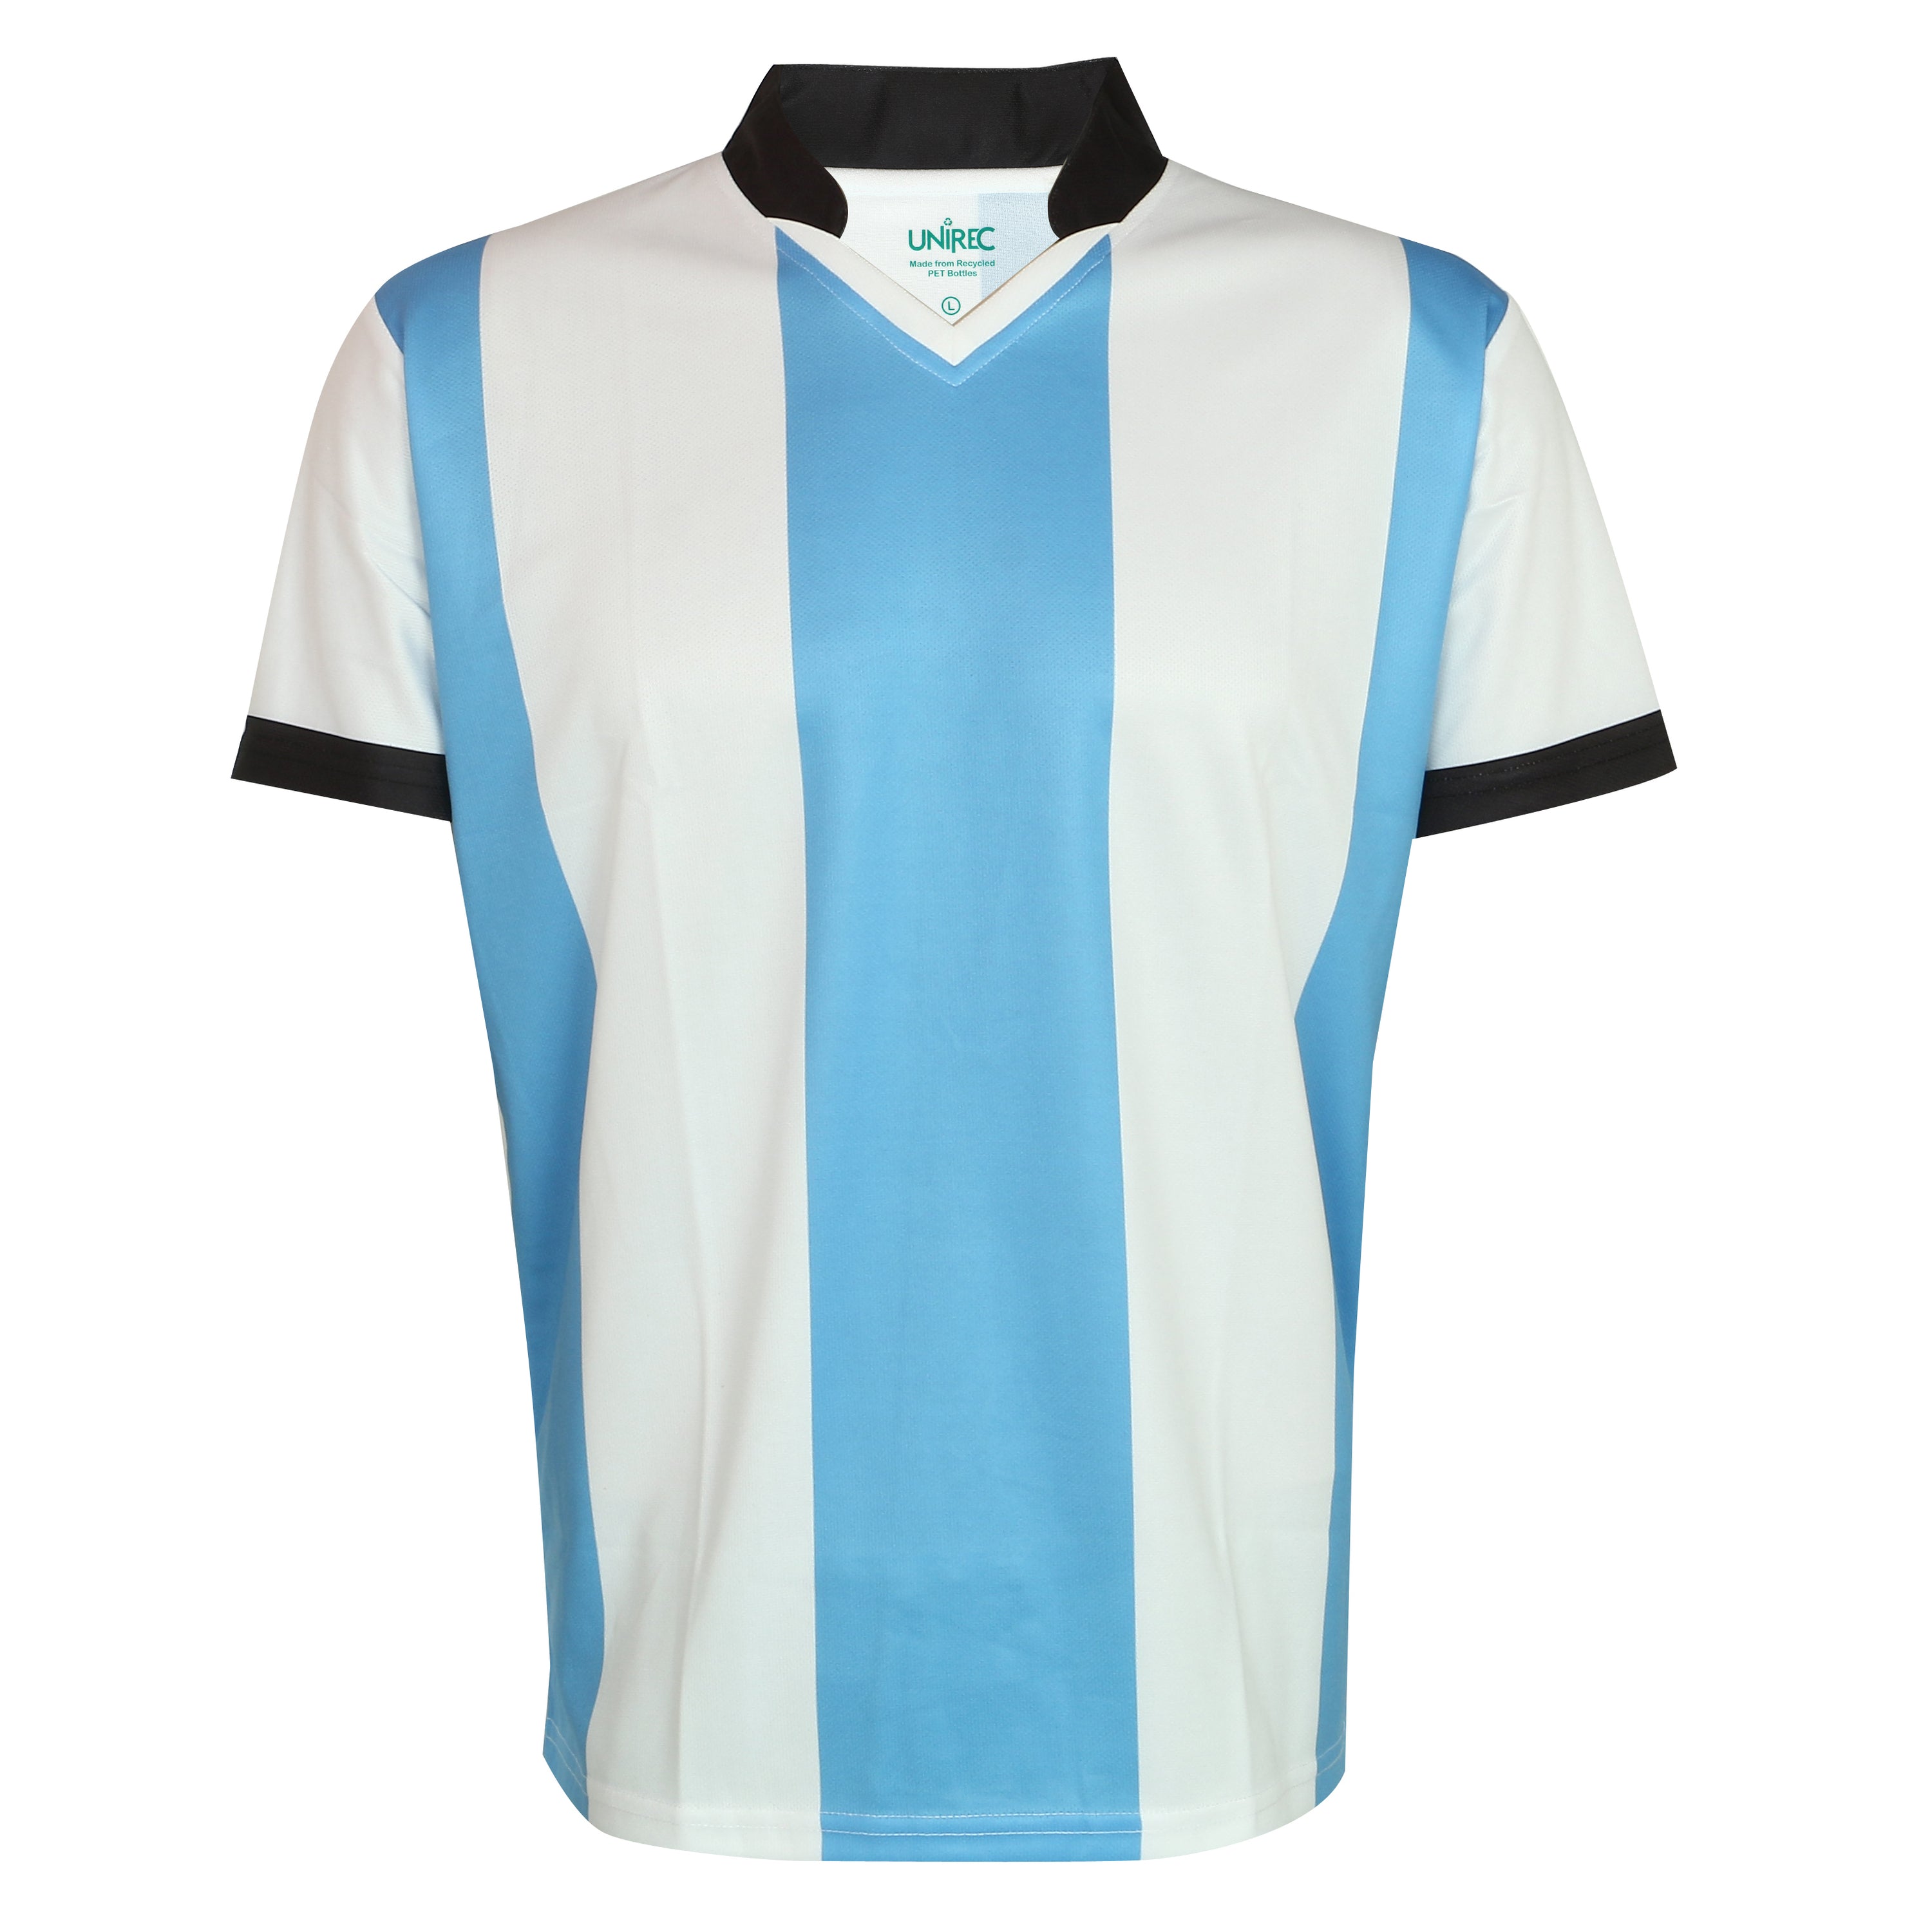 Argentina Football Jersey